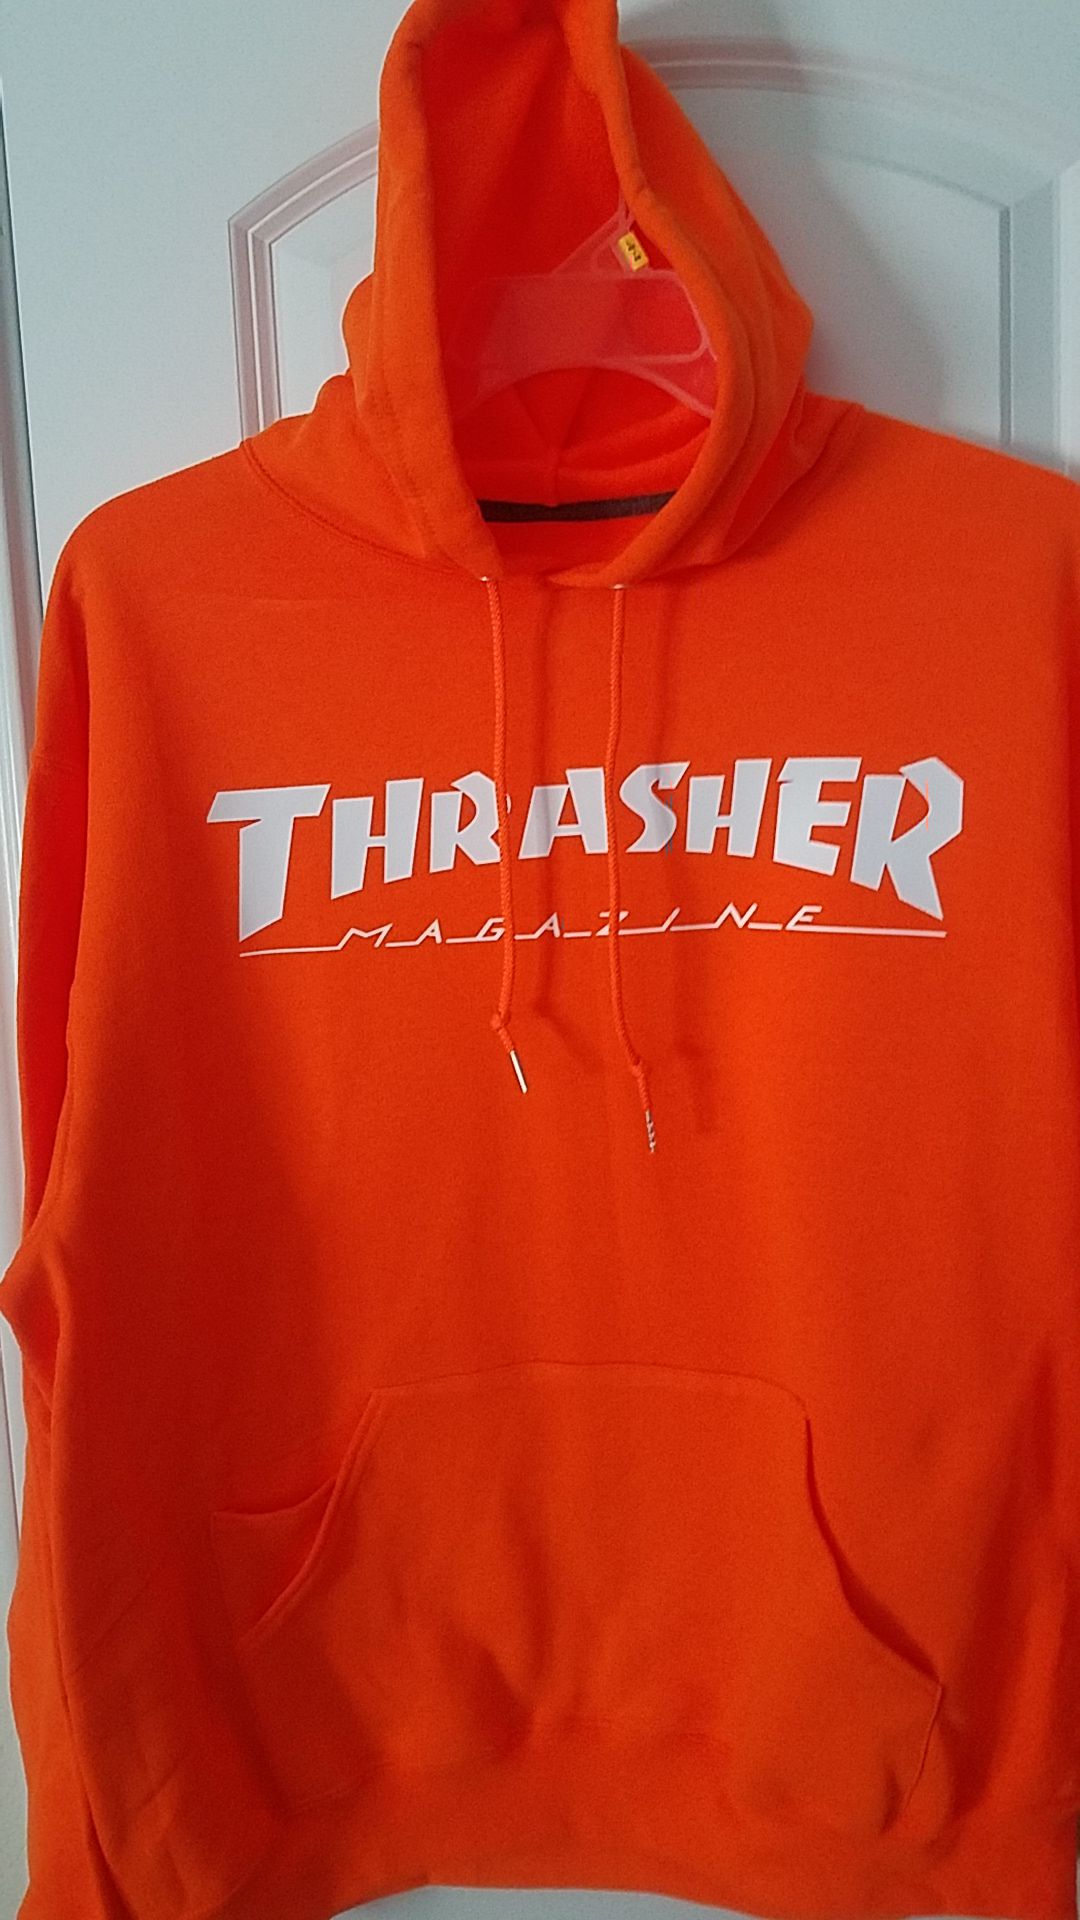 Thrasher hoodie never worn